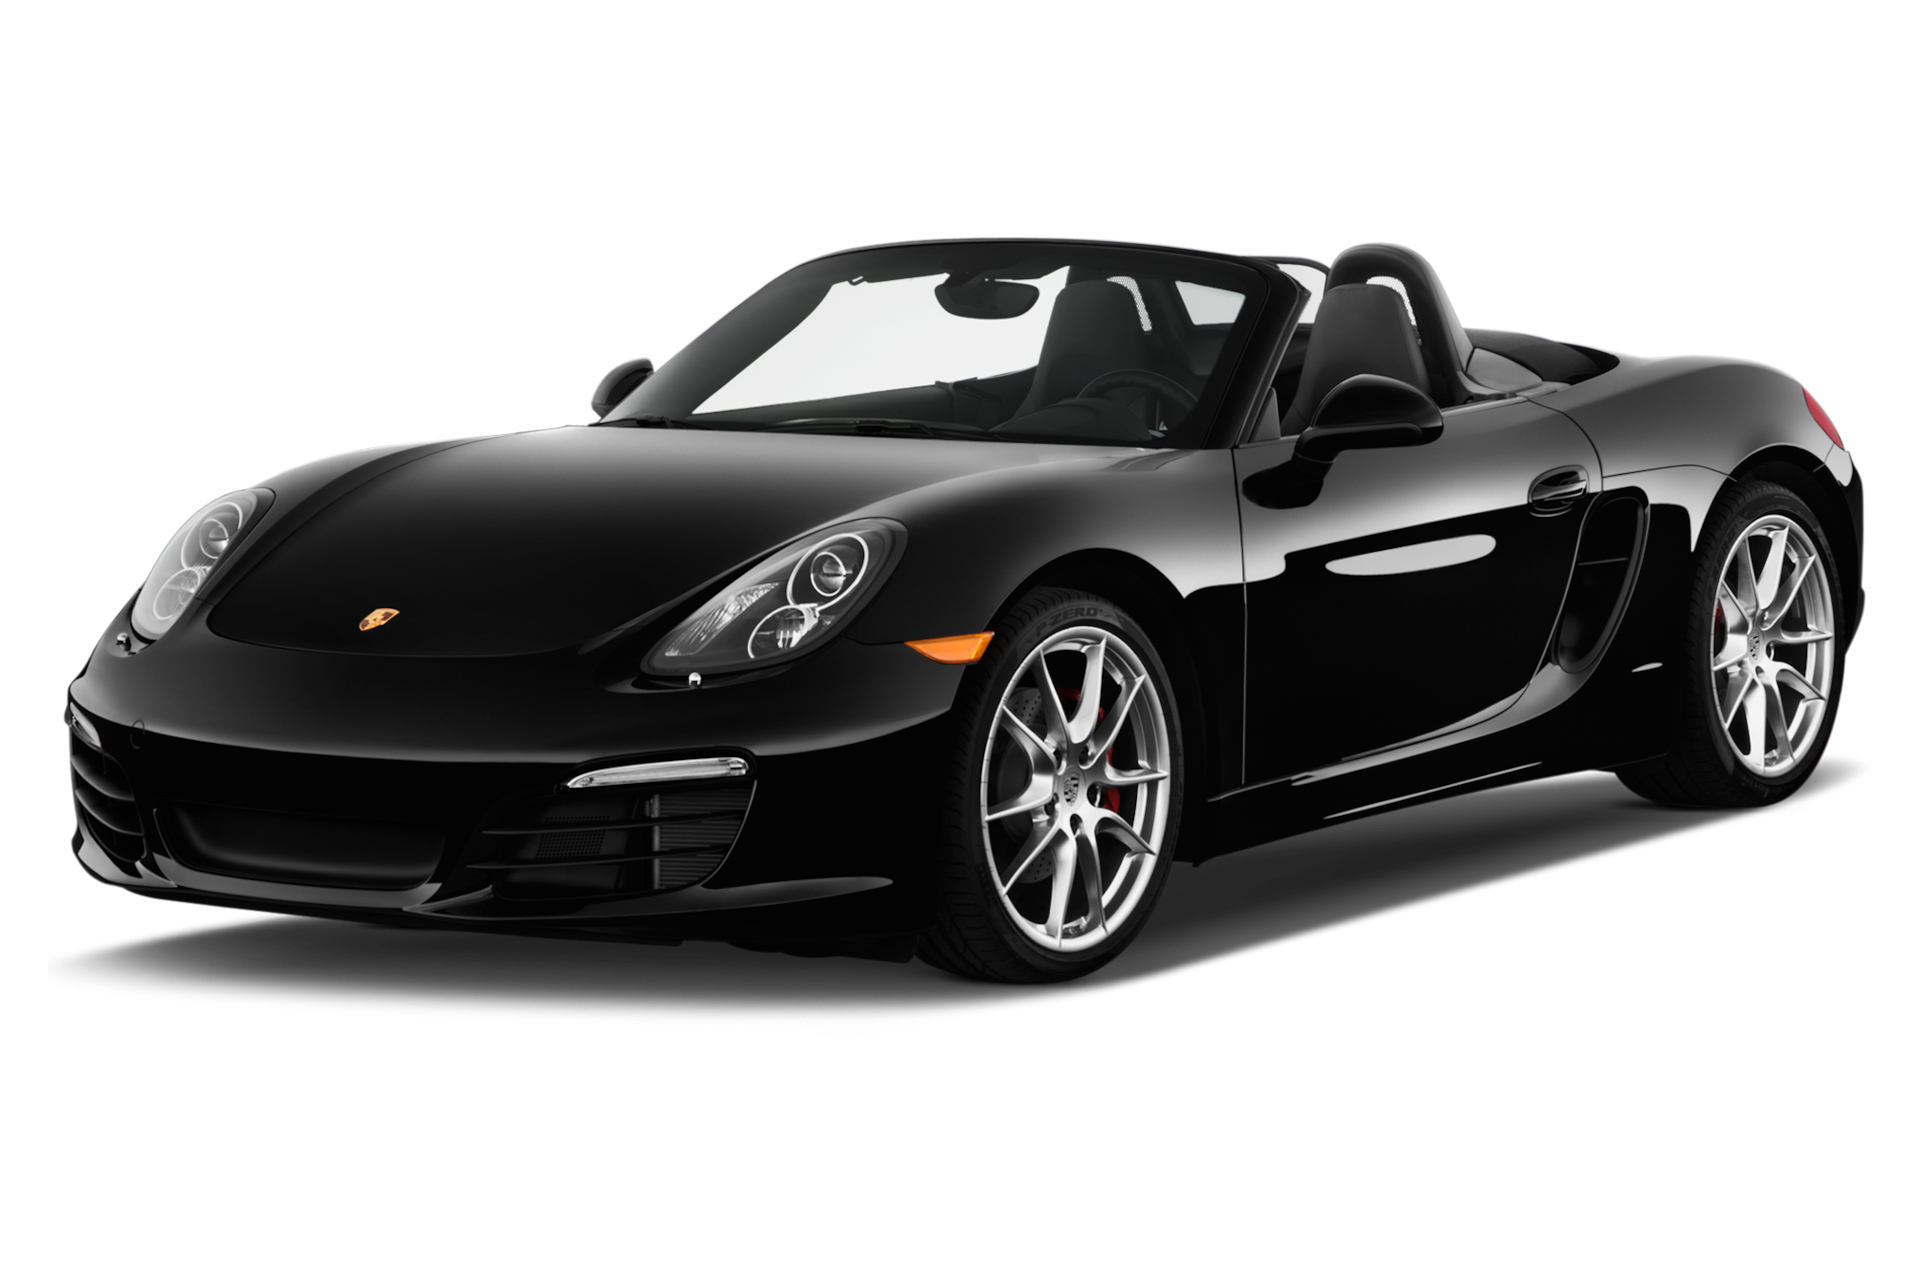 2015 Porsche Boxster Prices, Reviews, and Photos - MotorTrend